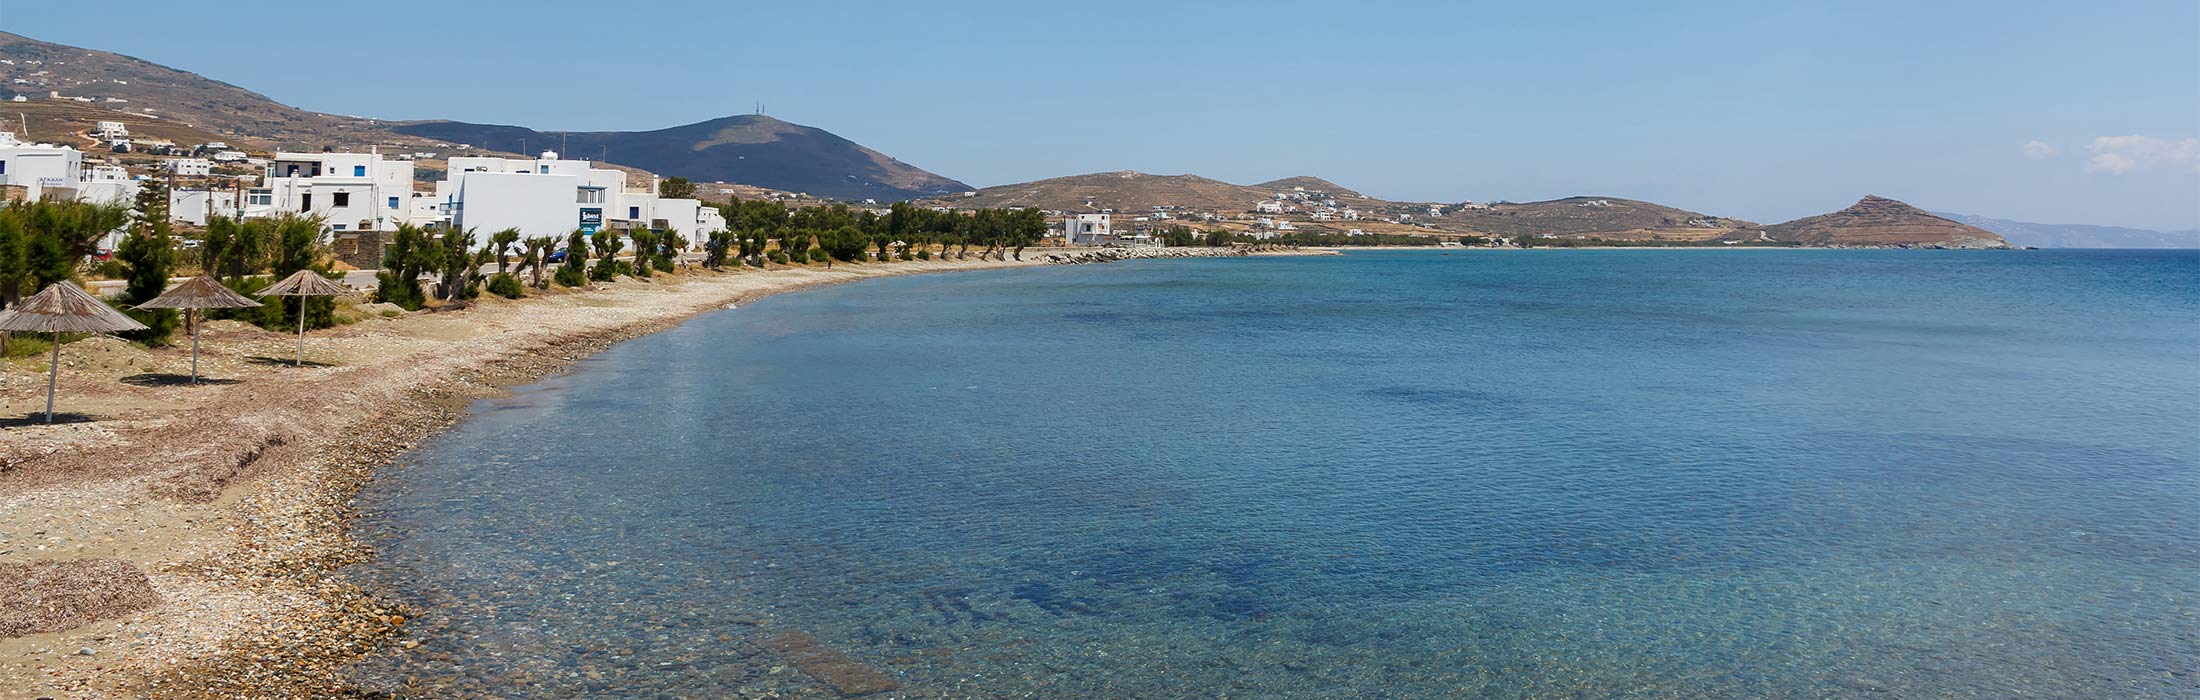 top yacht charter destinations mediterranean greece cyclades tinos main slider 1